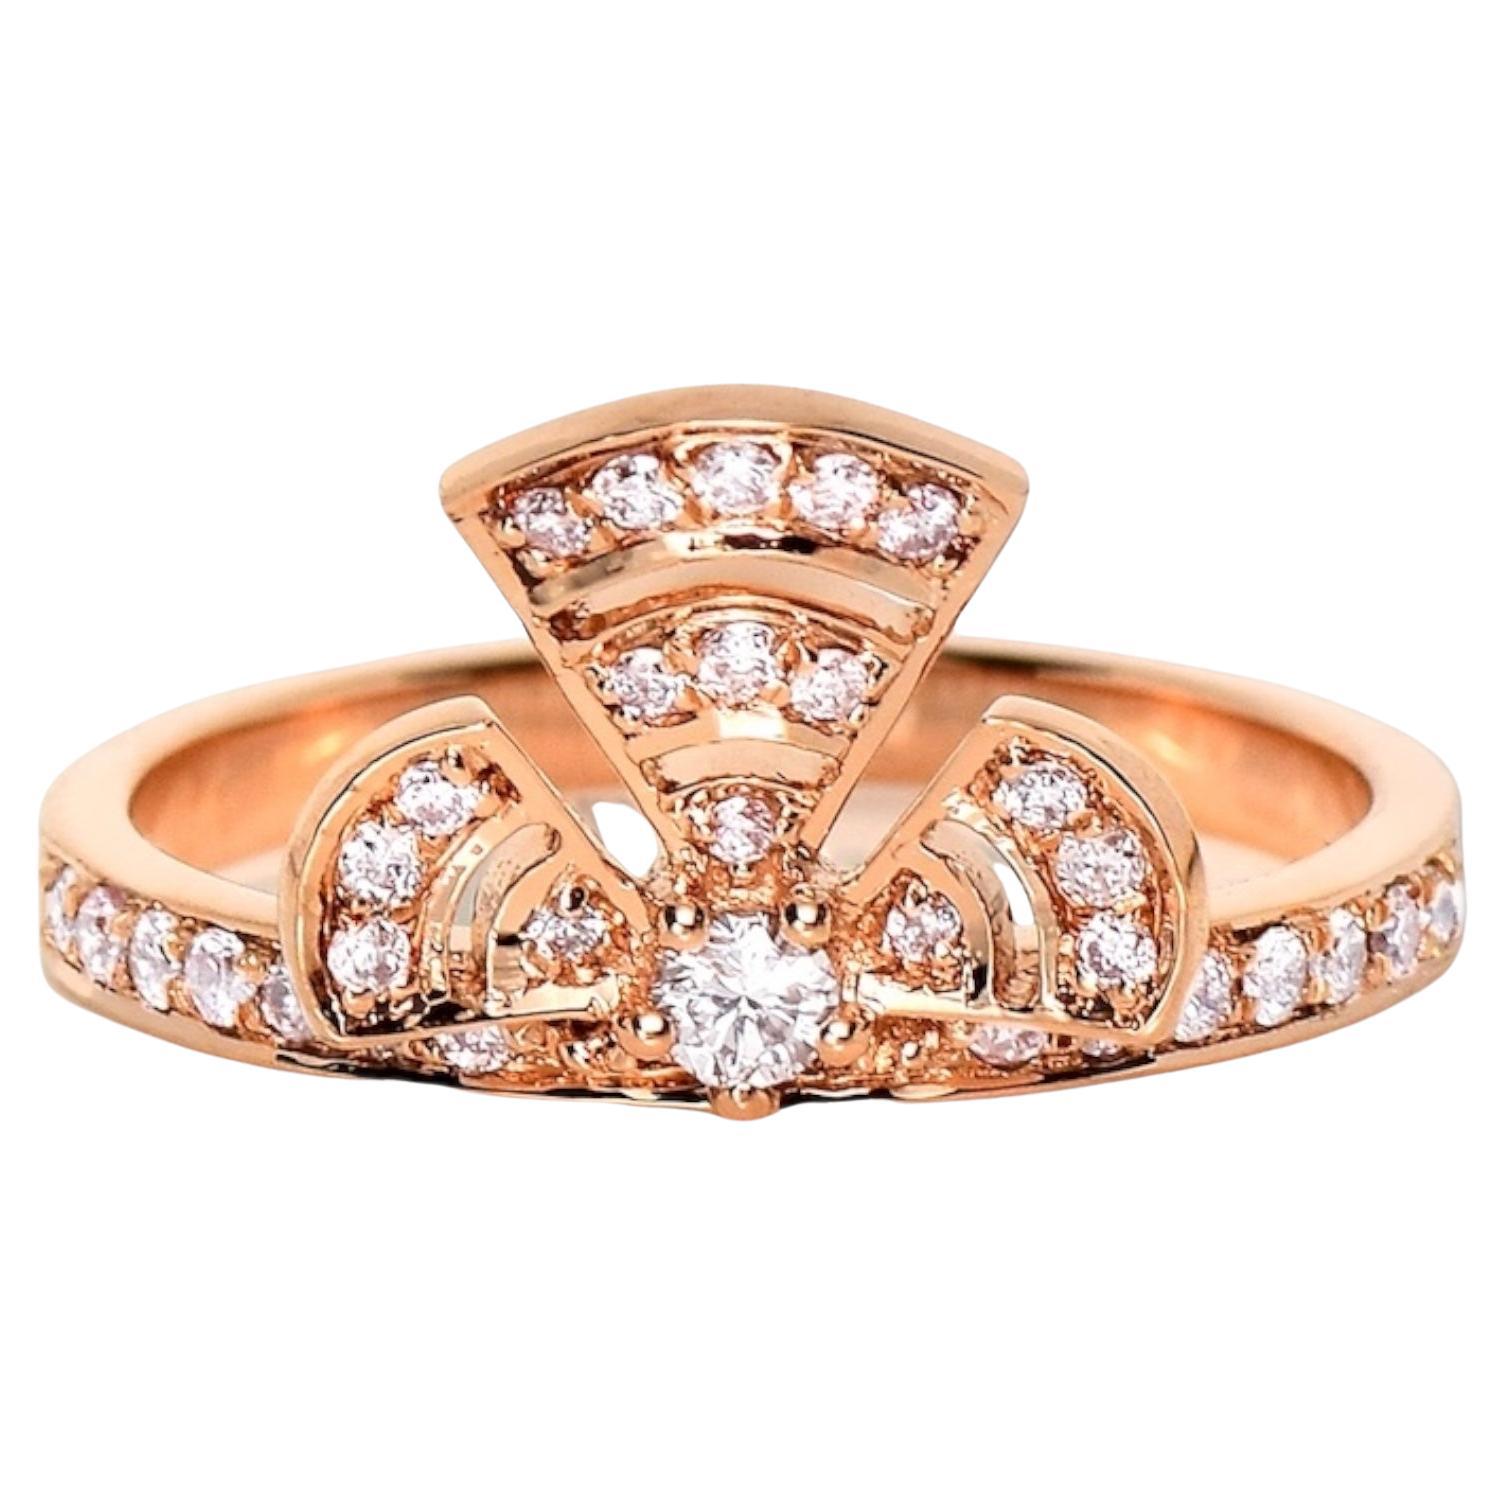 IGI 14K 0.30 ct Natural Pink Diamonds Art Deco Design Engagement Ring For Sale